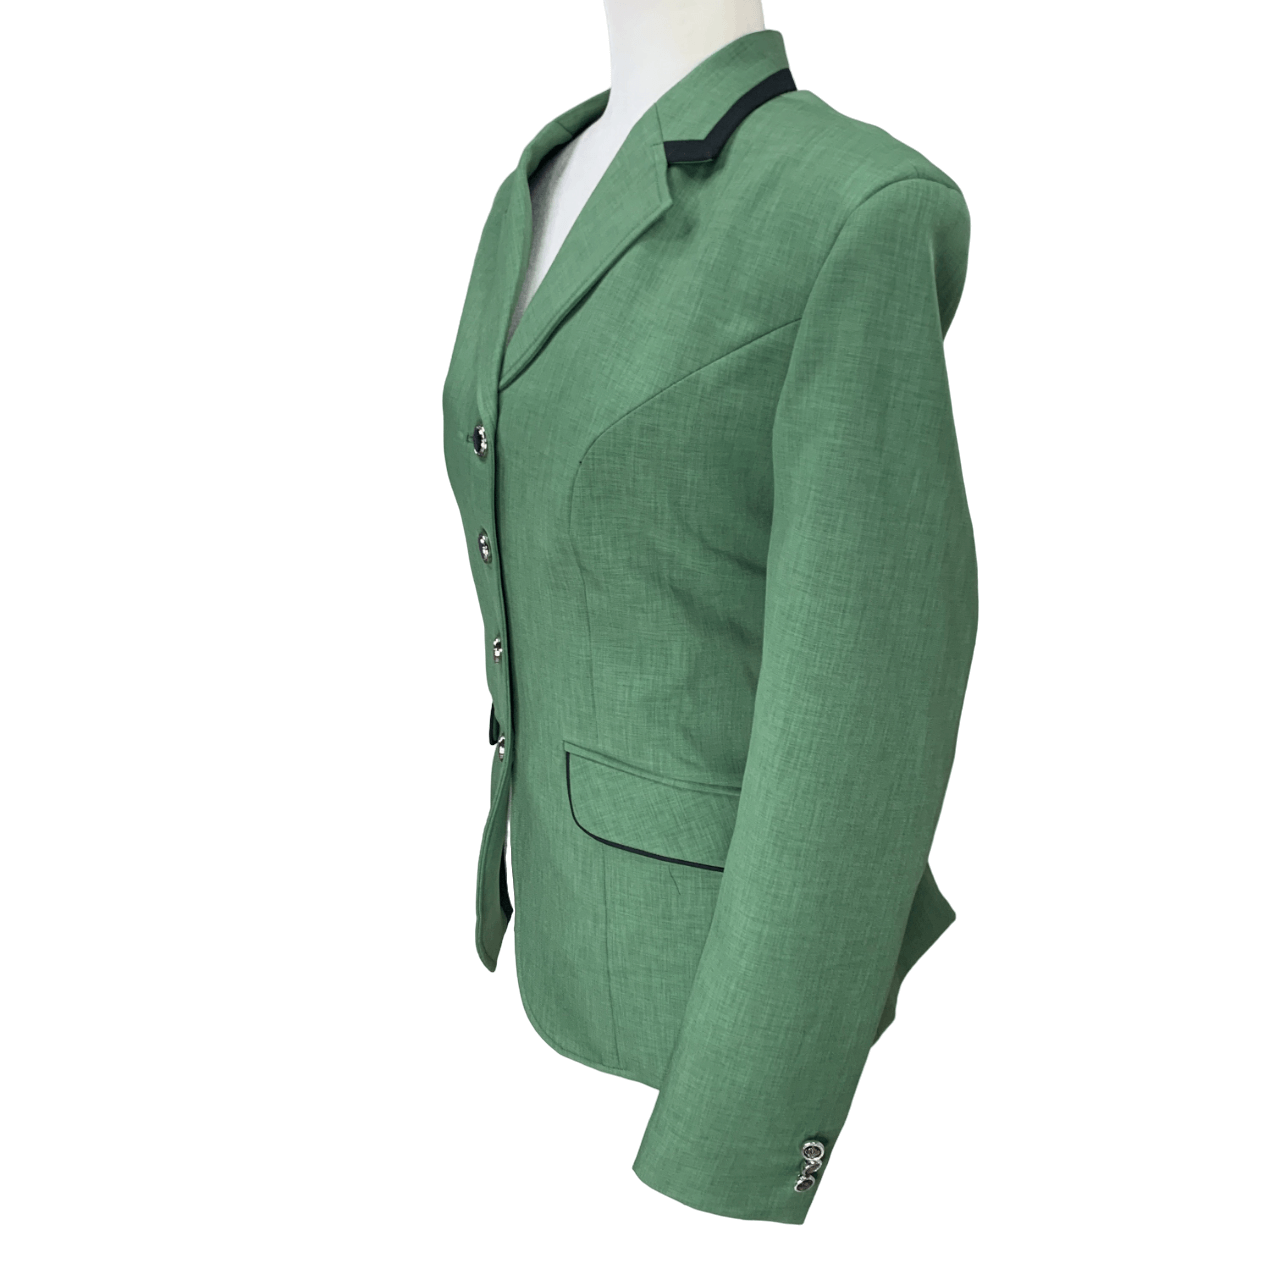 Custom-Made Show Jacket in Green - Woman's XL/XXL